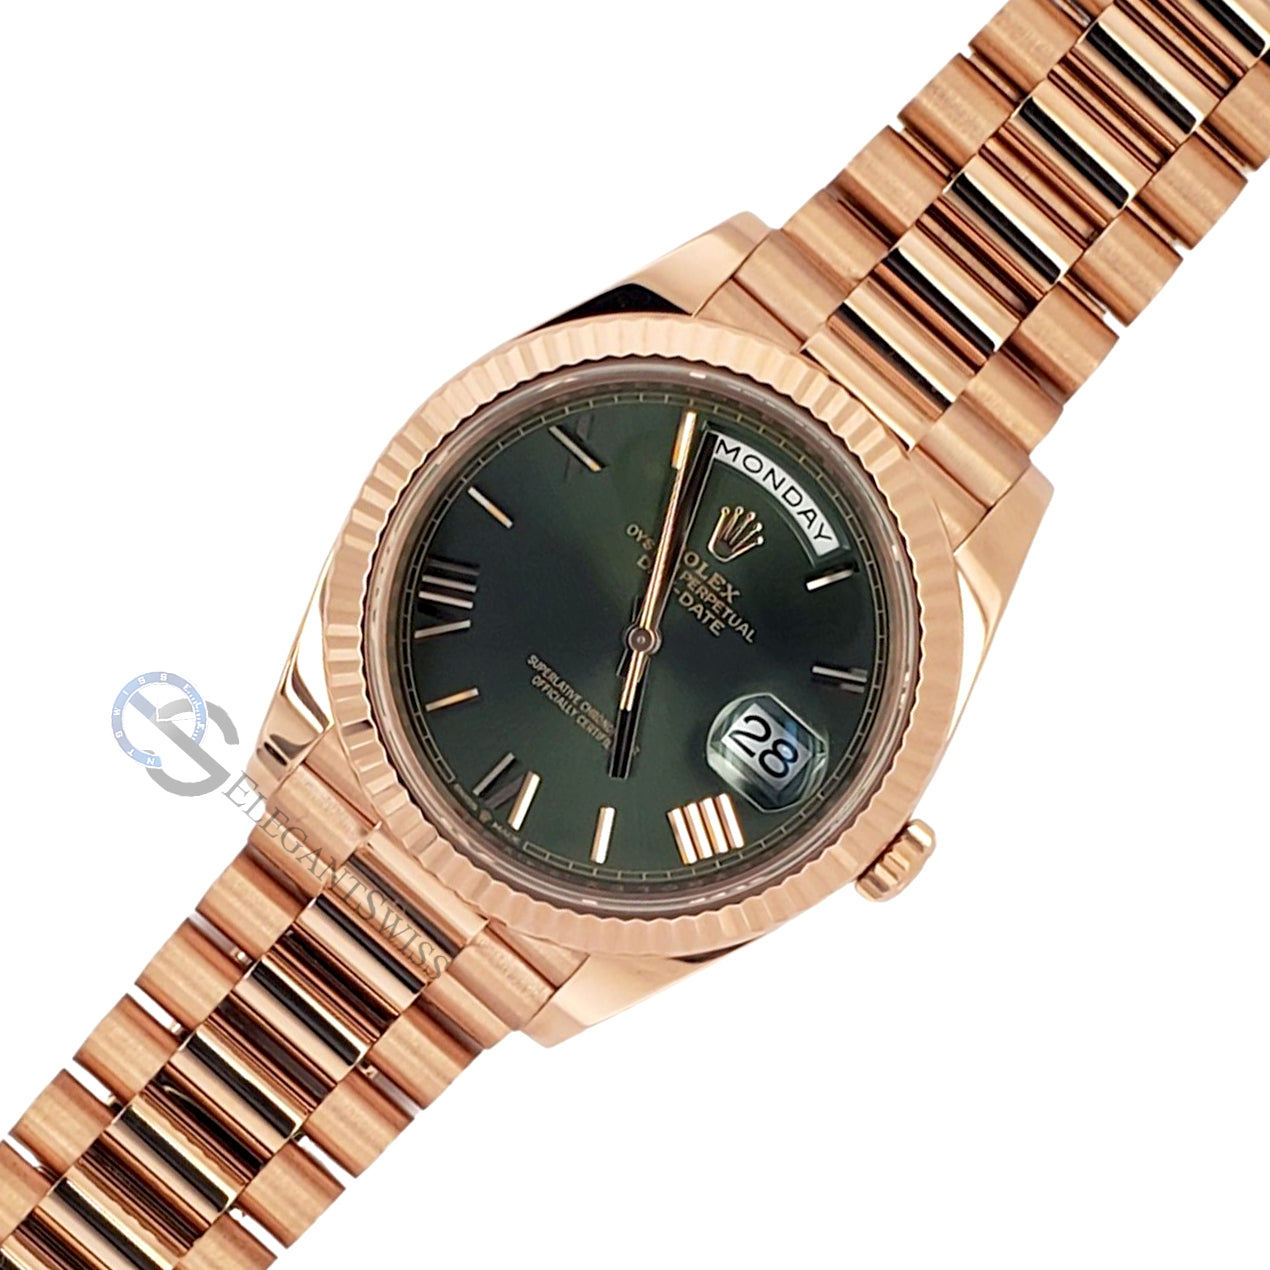 Rolex Everose Gold Lady-Datejust 28 Watch - Fluted Bezel - Olive